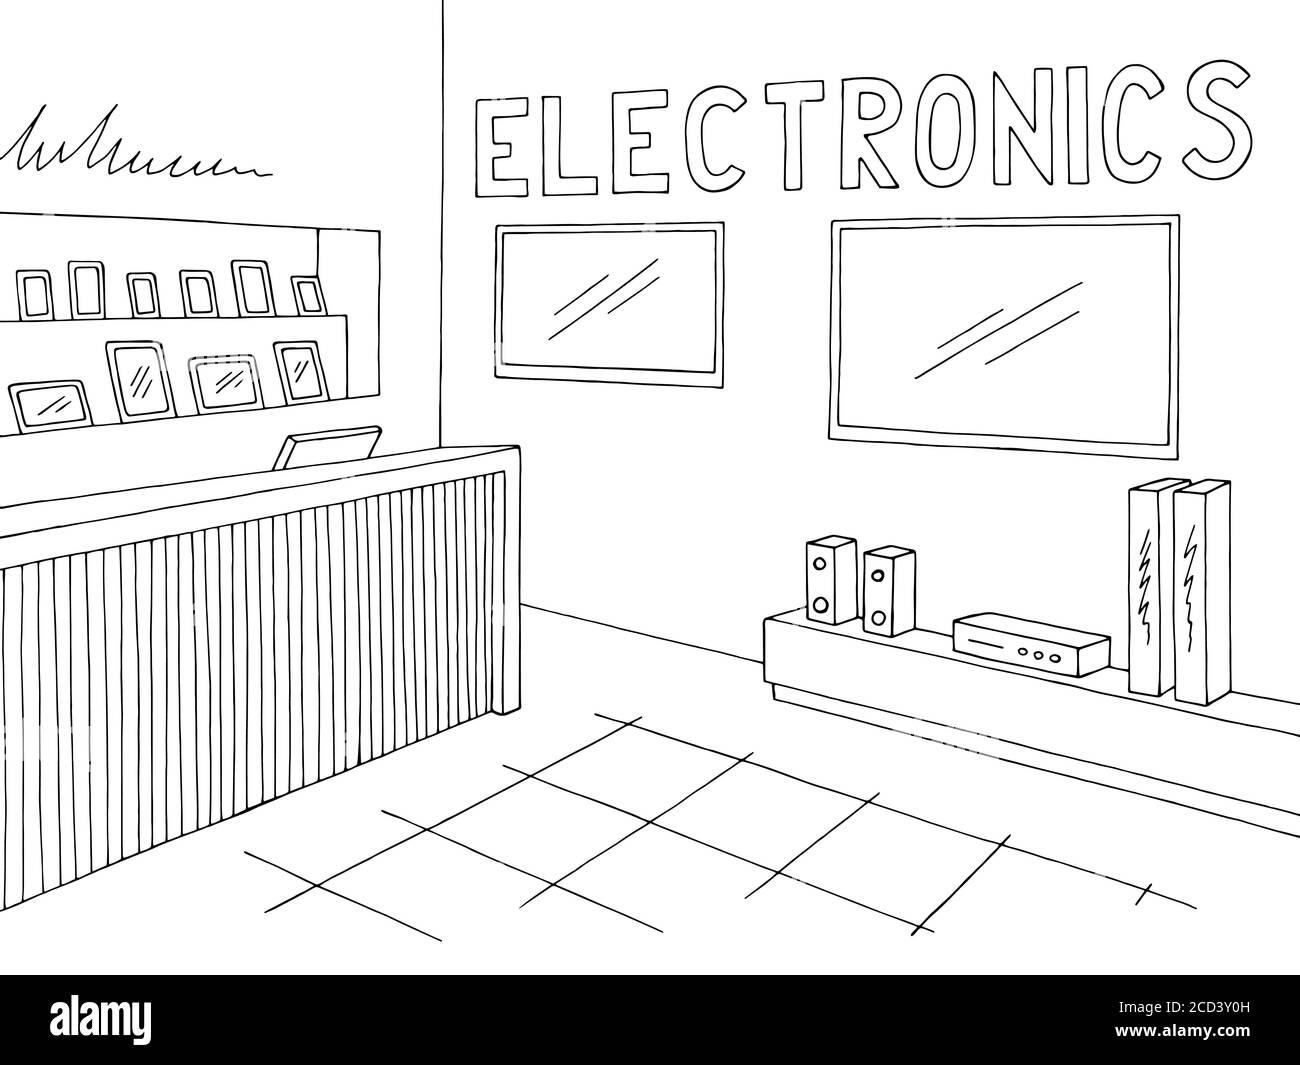 Electronics store interior graphic black white sketch illustration vector Stock Vector